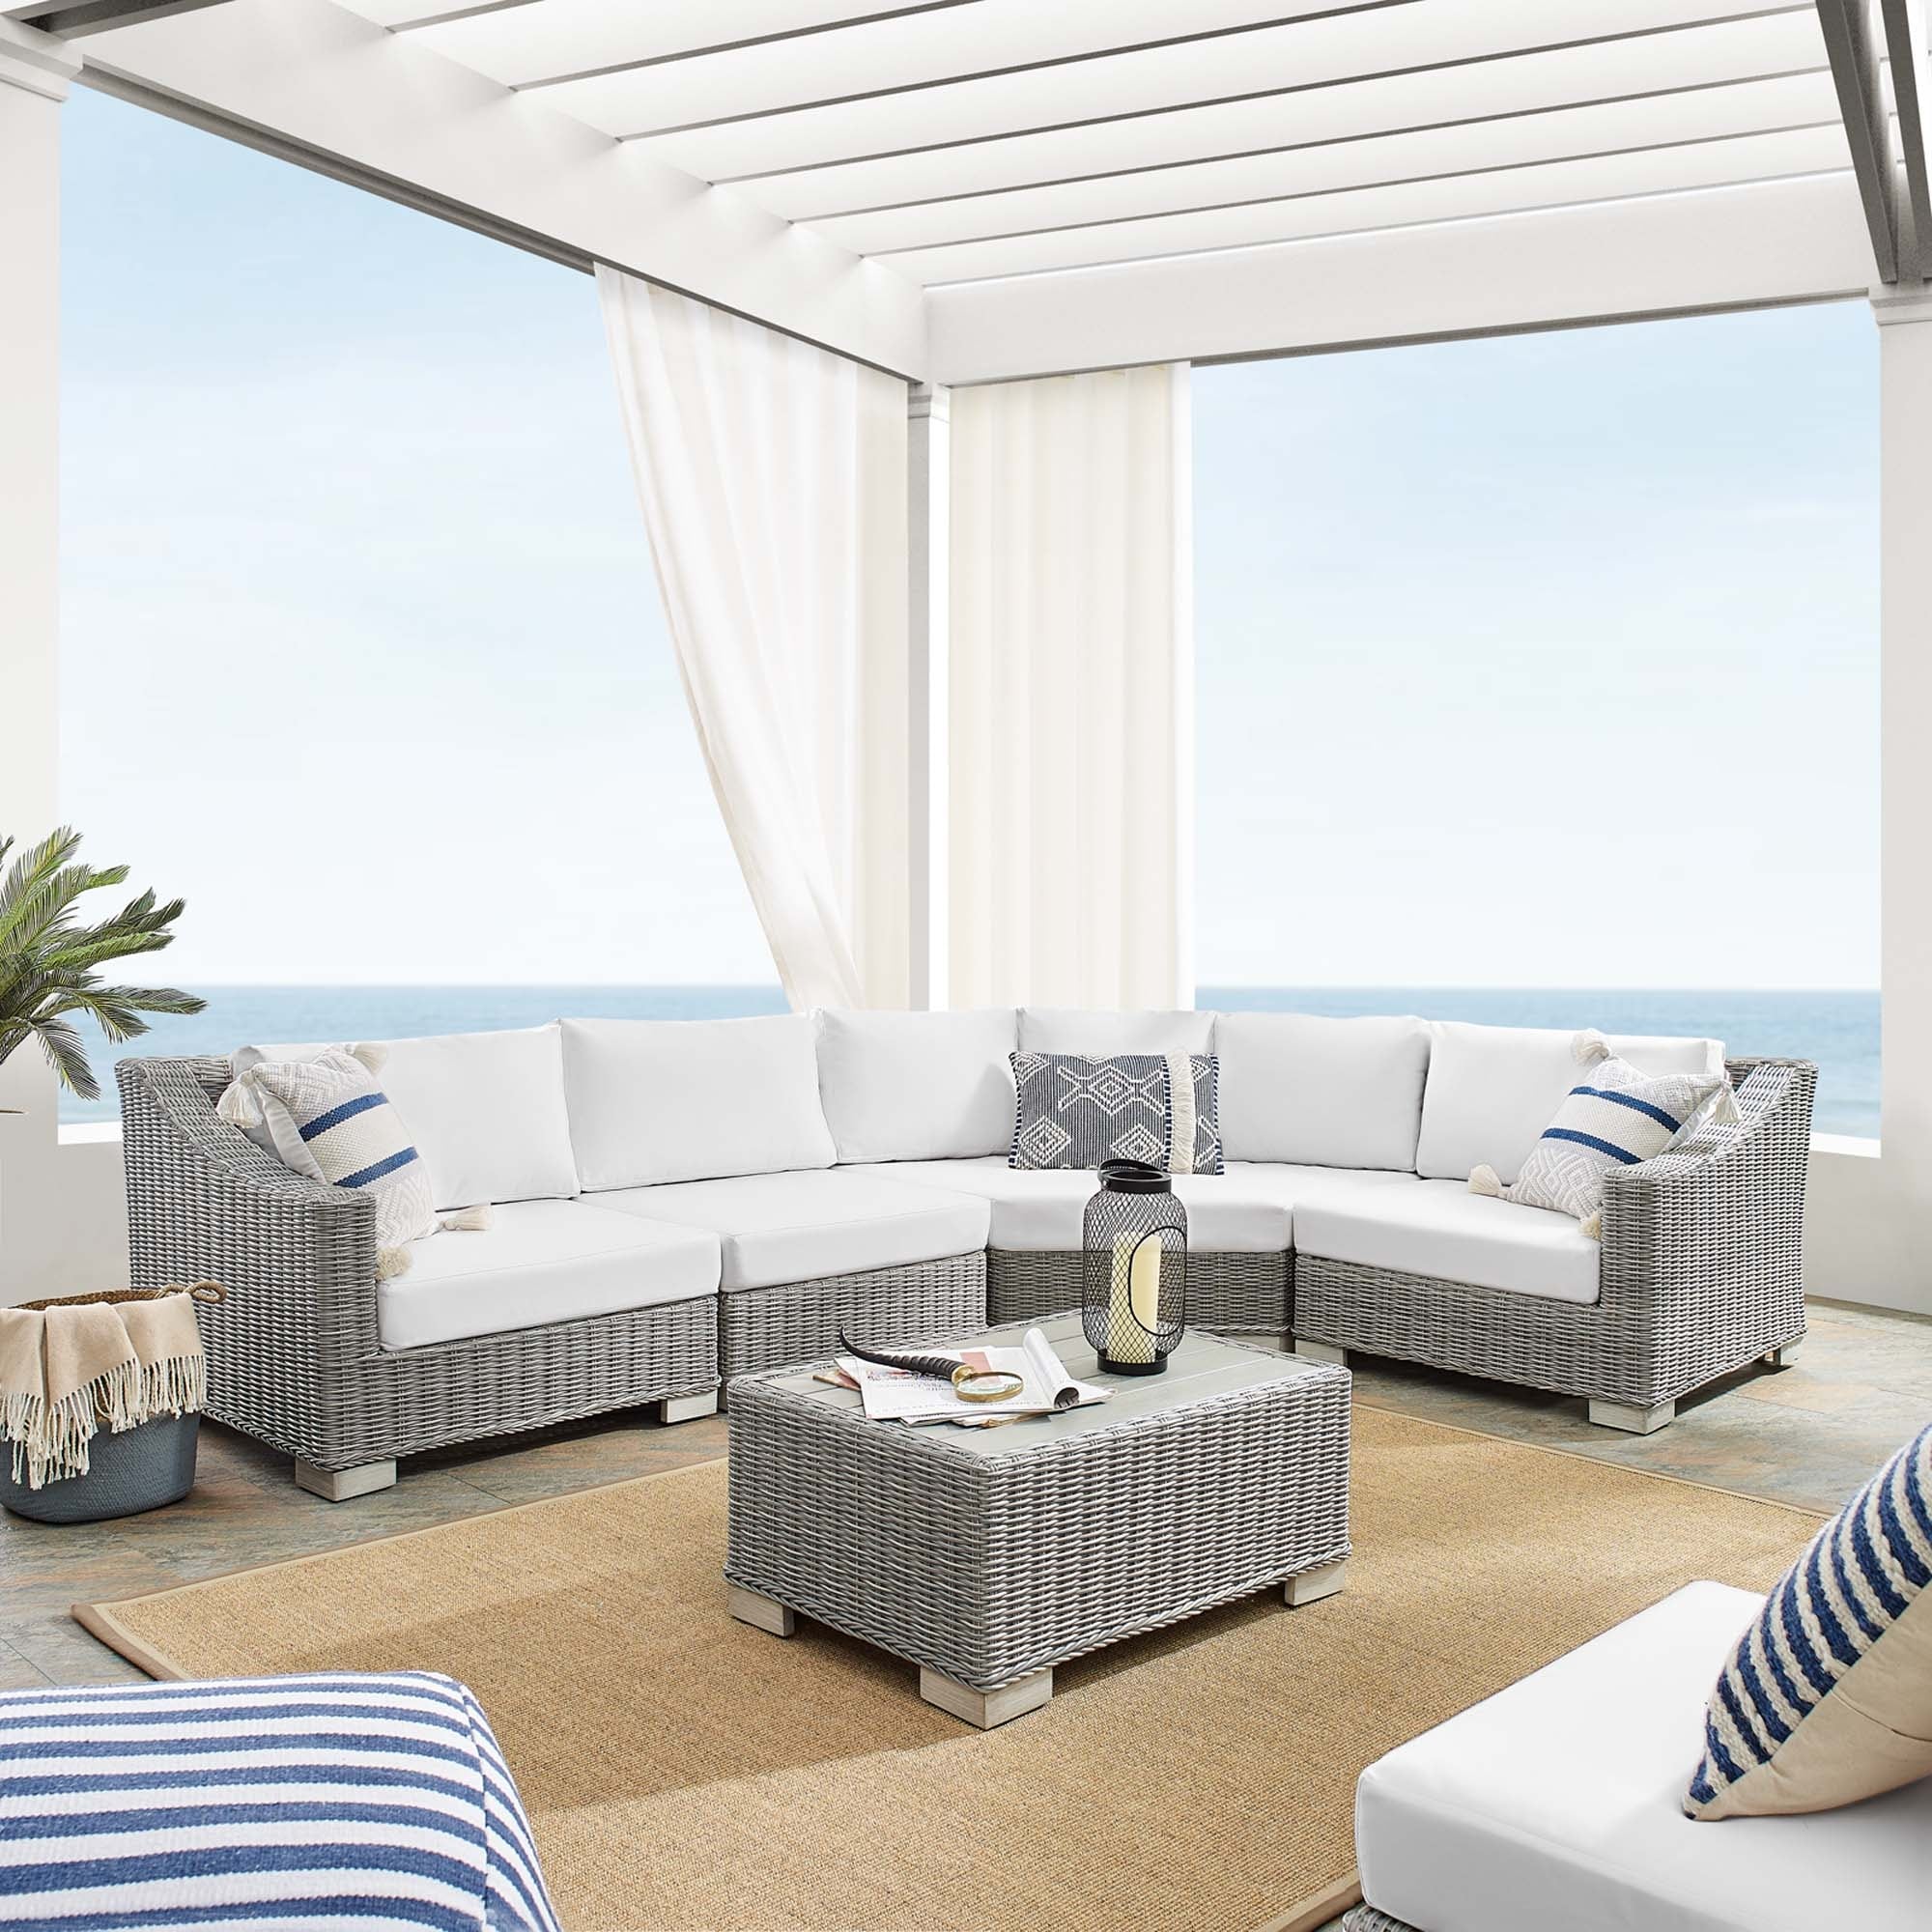 Conway Sunbrellaand Outdoor Patio Wicker Rattan 5-piece Sectional Sofa Furniture Set